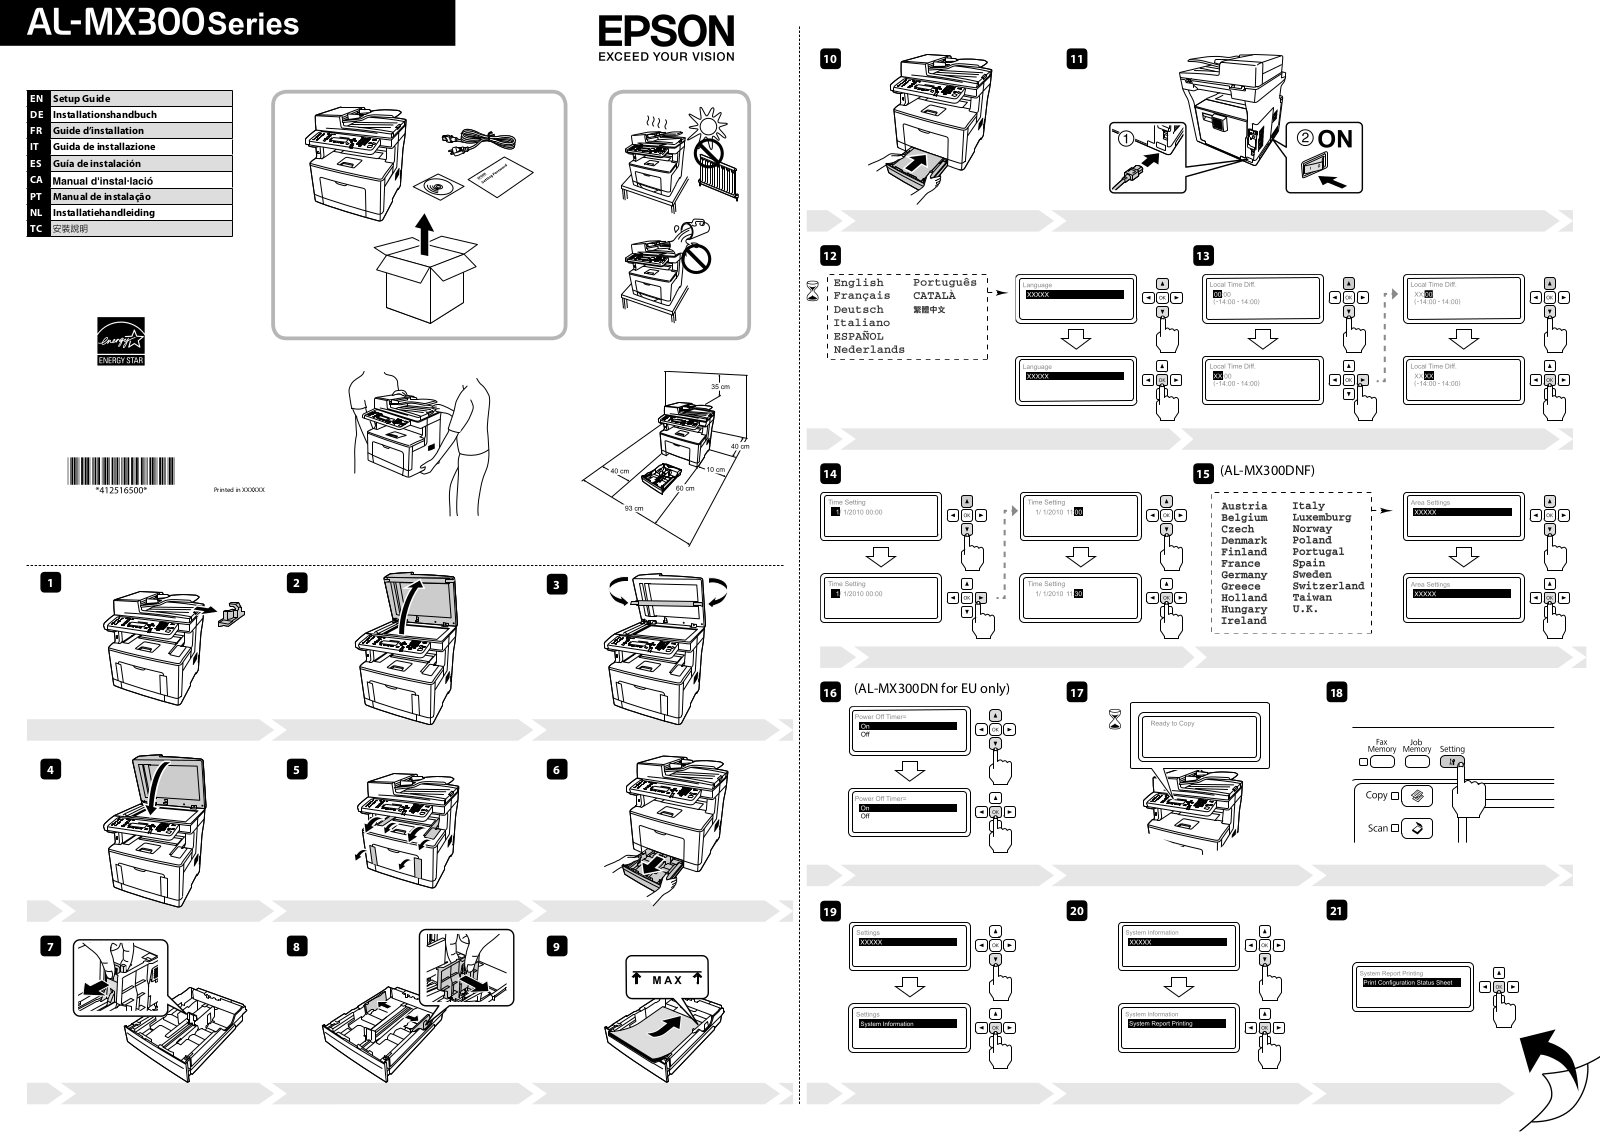 EPSON WORKFORCE AL-MX300DN User Manual